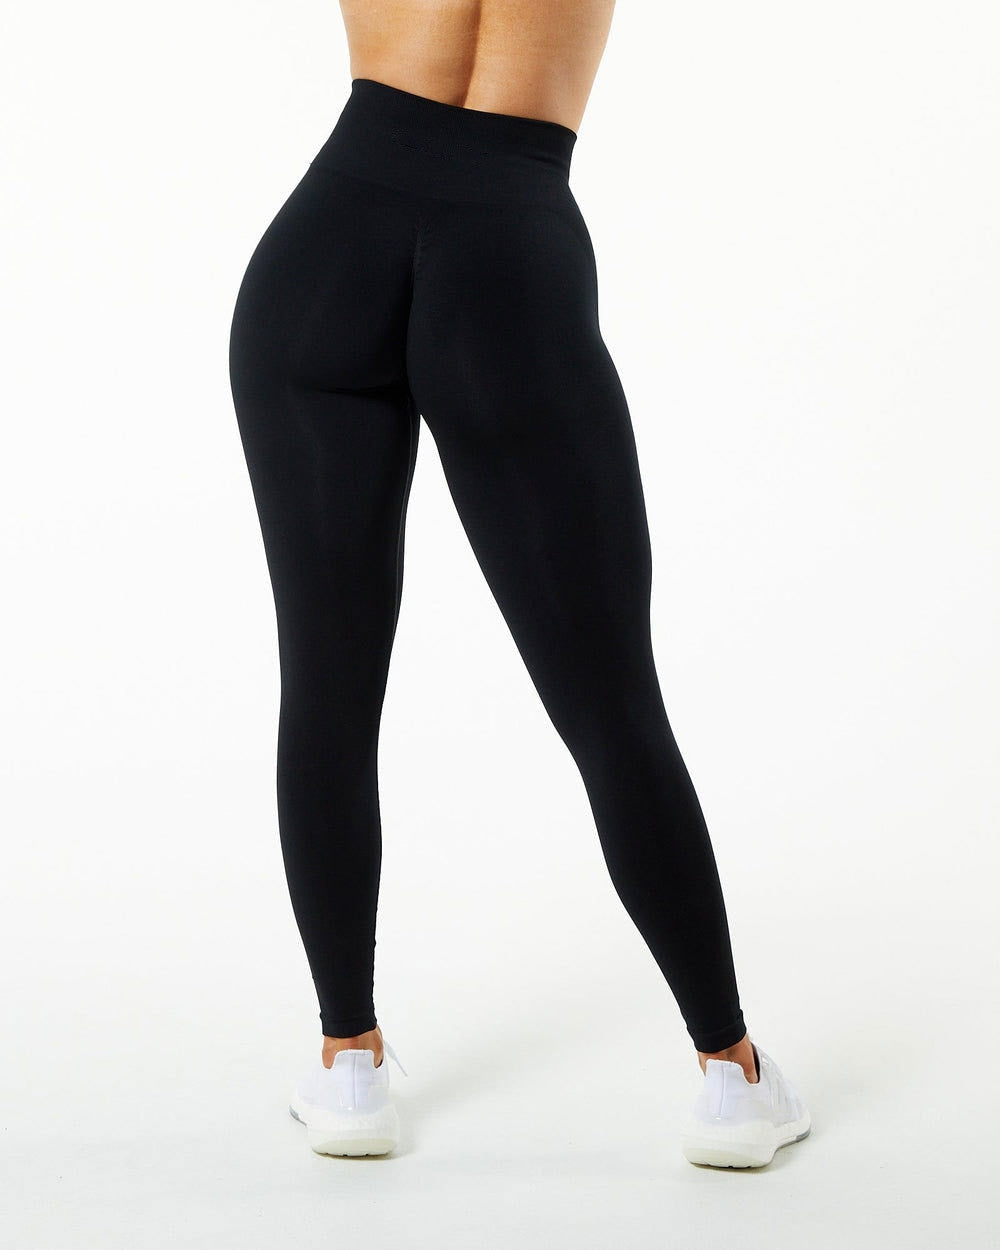 Ruffle Yoga Pants Activewear Truetights Hemp Black S 